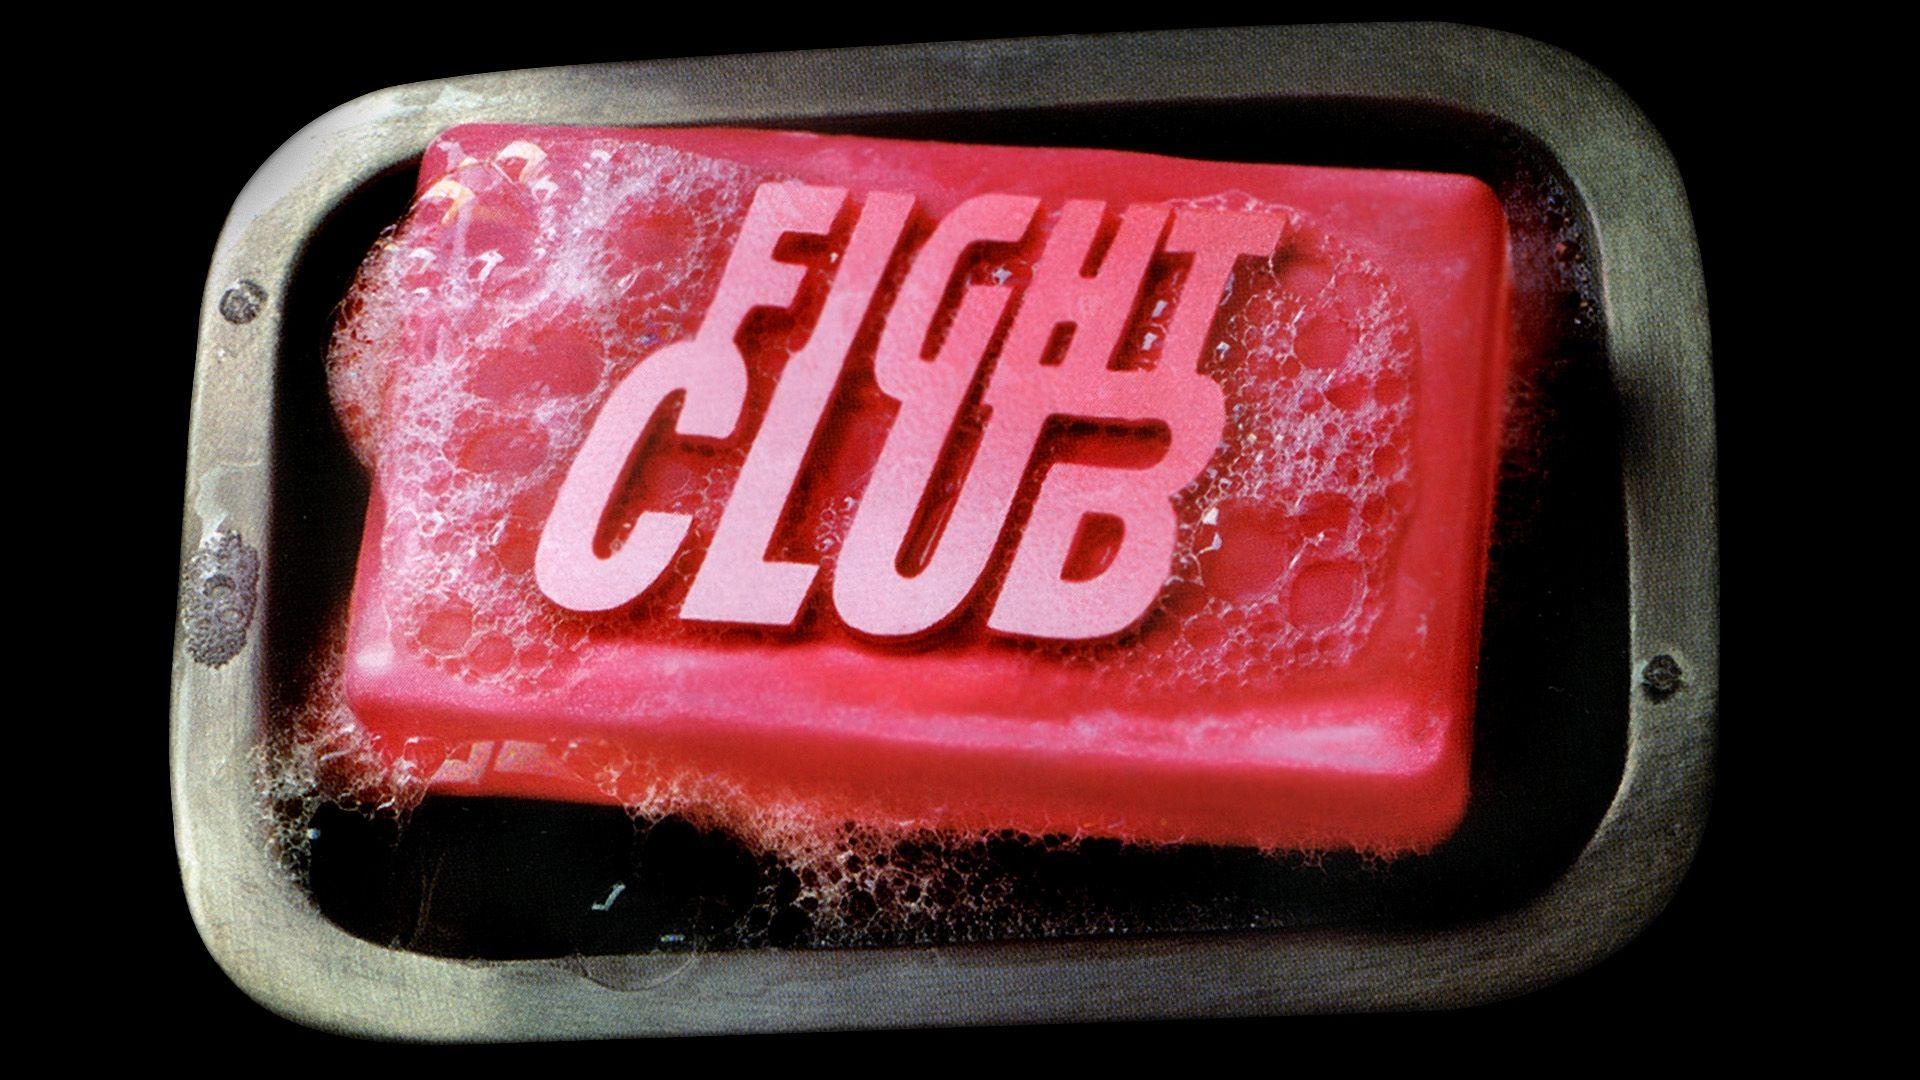 Download Wallpaper 1920x1080 fight club, soap, text, red Full HD